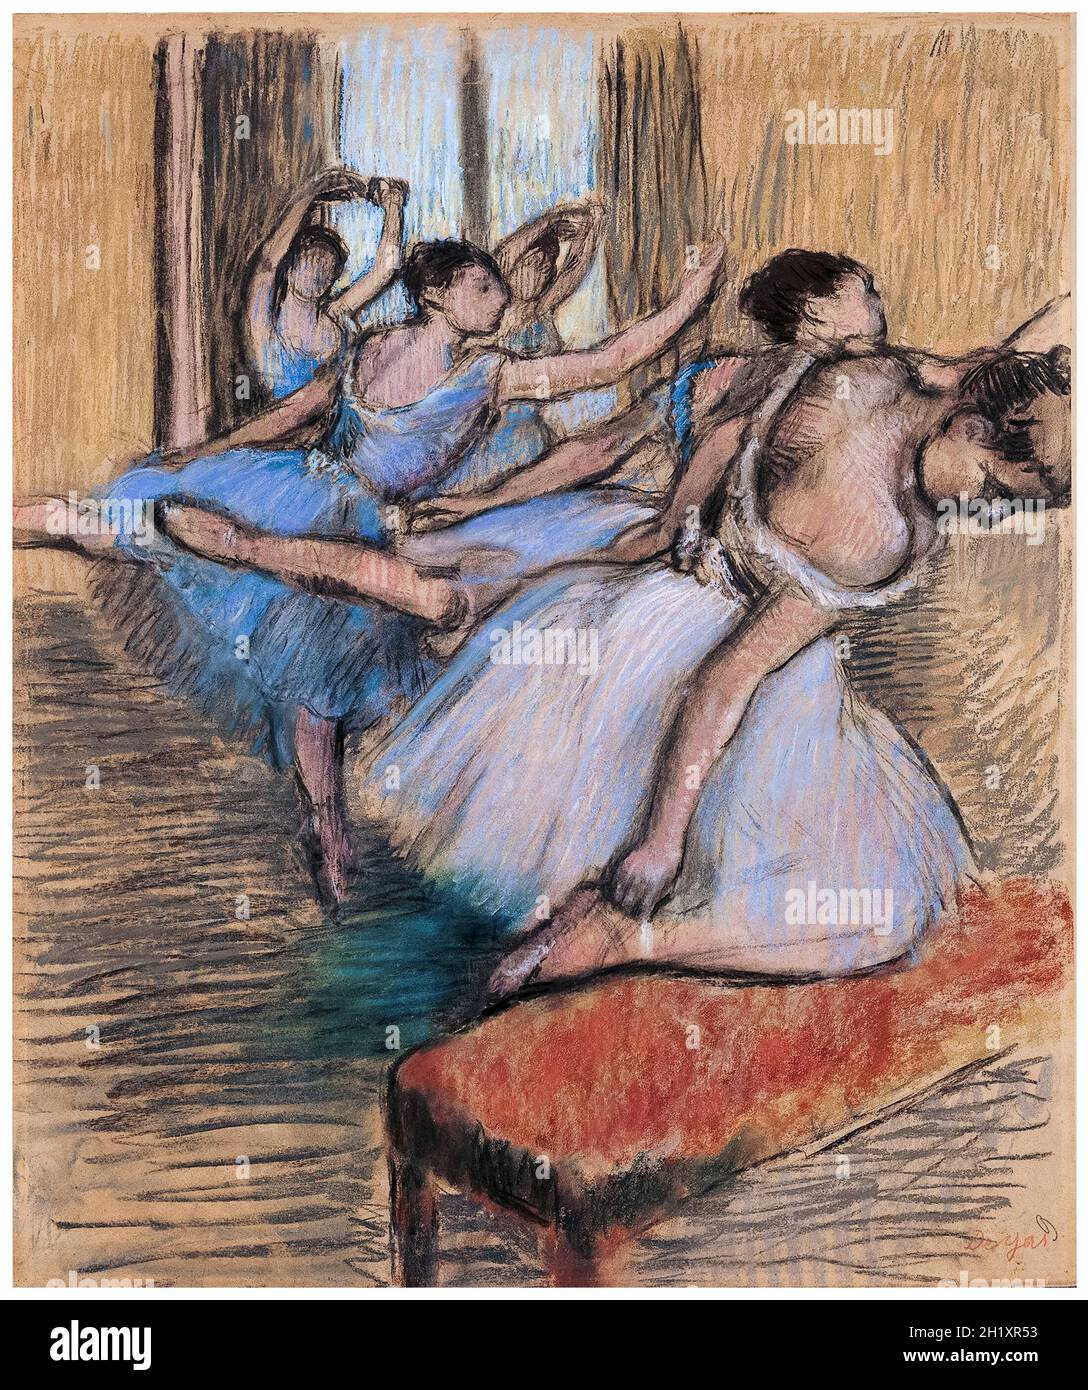 Scribble Junkies: Classic Tuesday Inspiration: Edgar Degas Drawings..